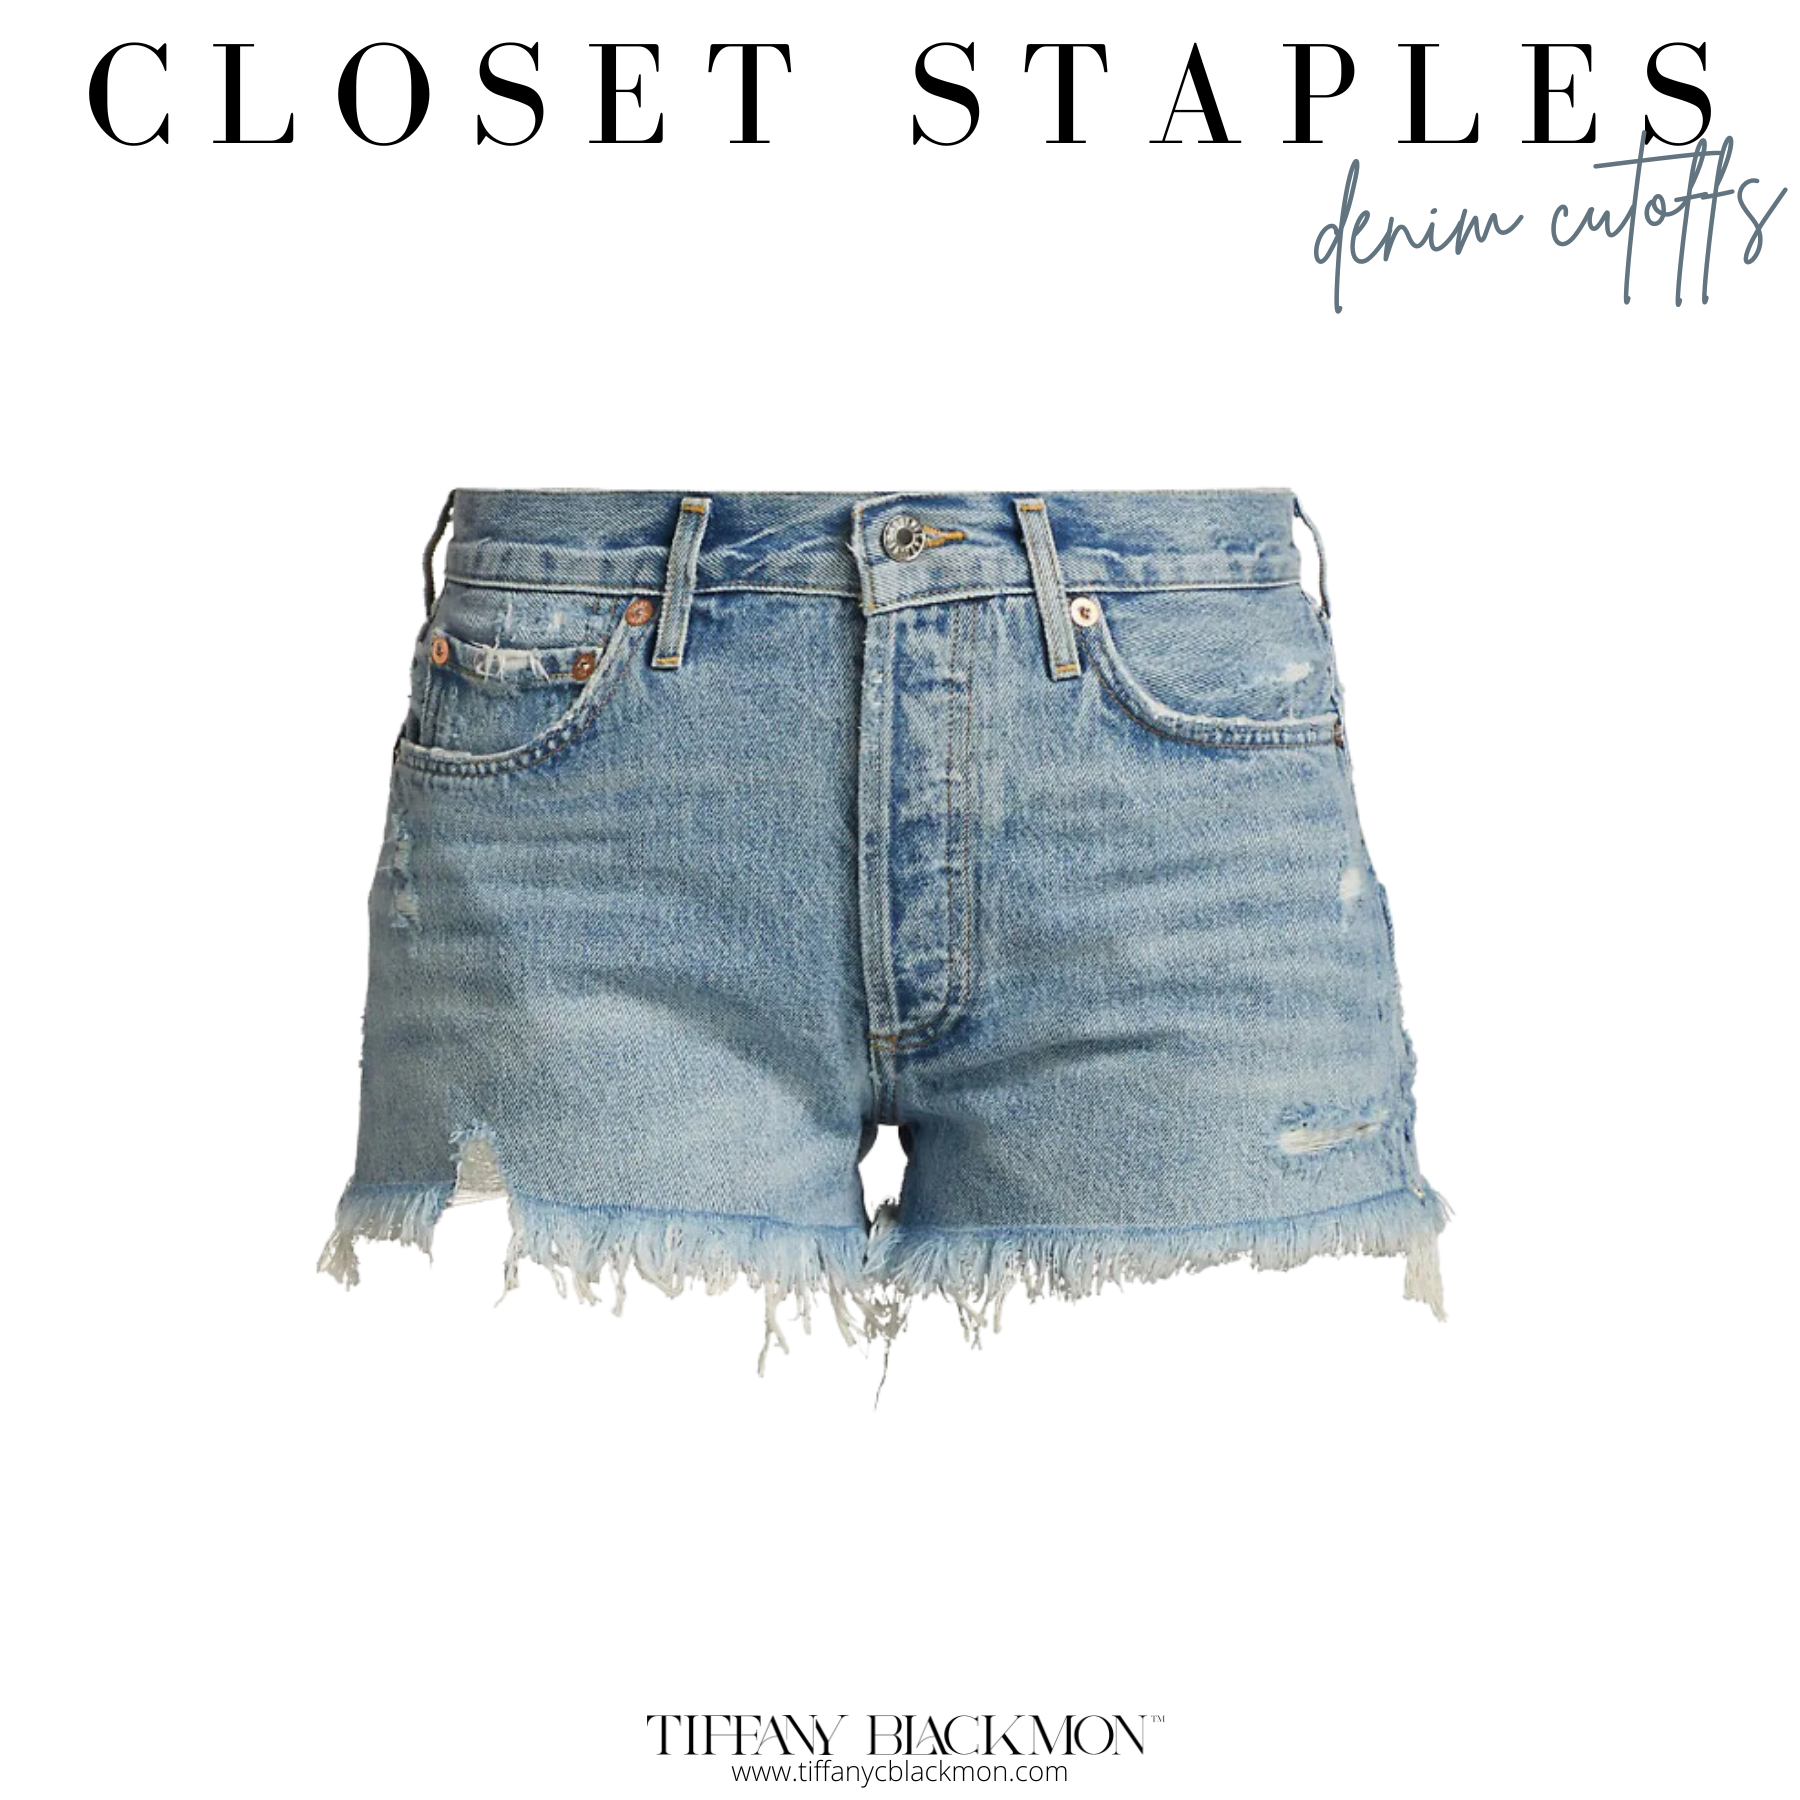 Staple Wardrobe Pieces
#closet #fashion #summerfashion #staplepieces #tanktop #blazer #denim #jeans #closetstaples #jumpsuit #shoes #springfashion